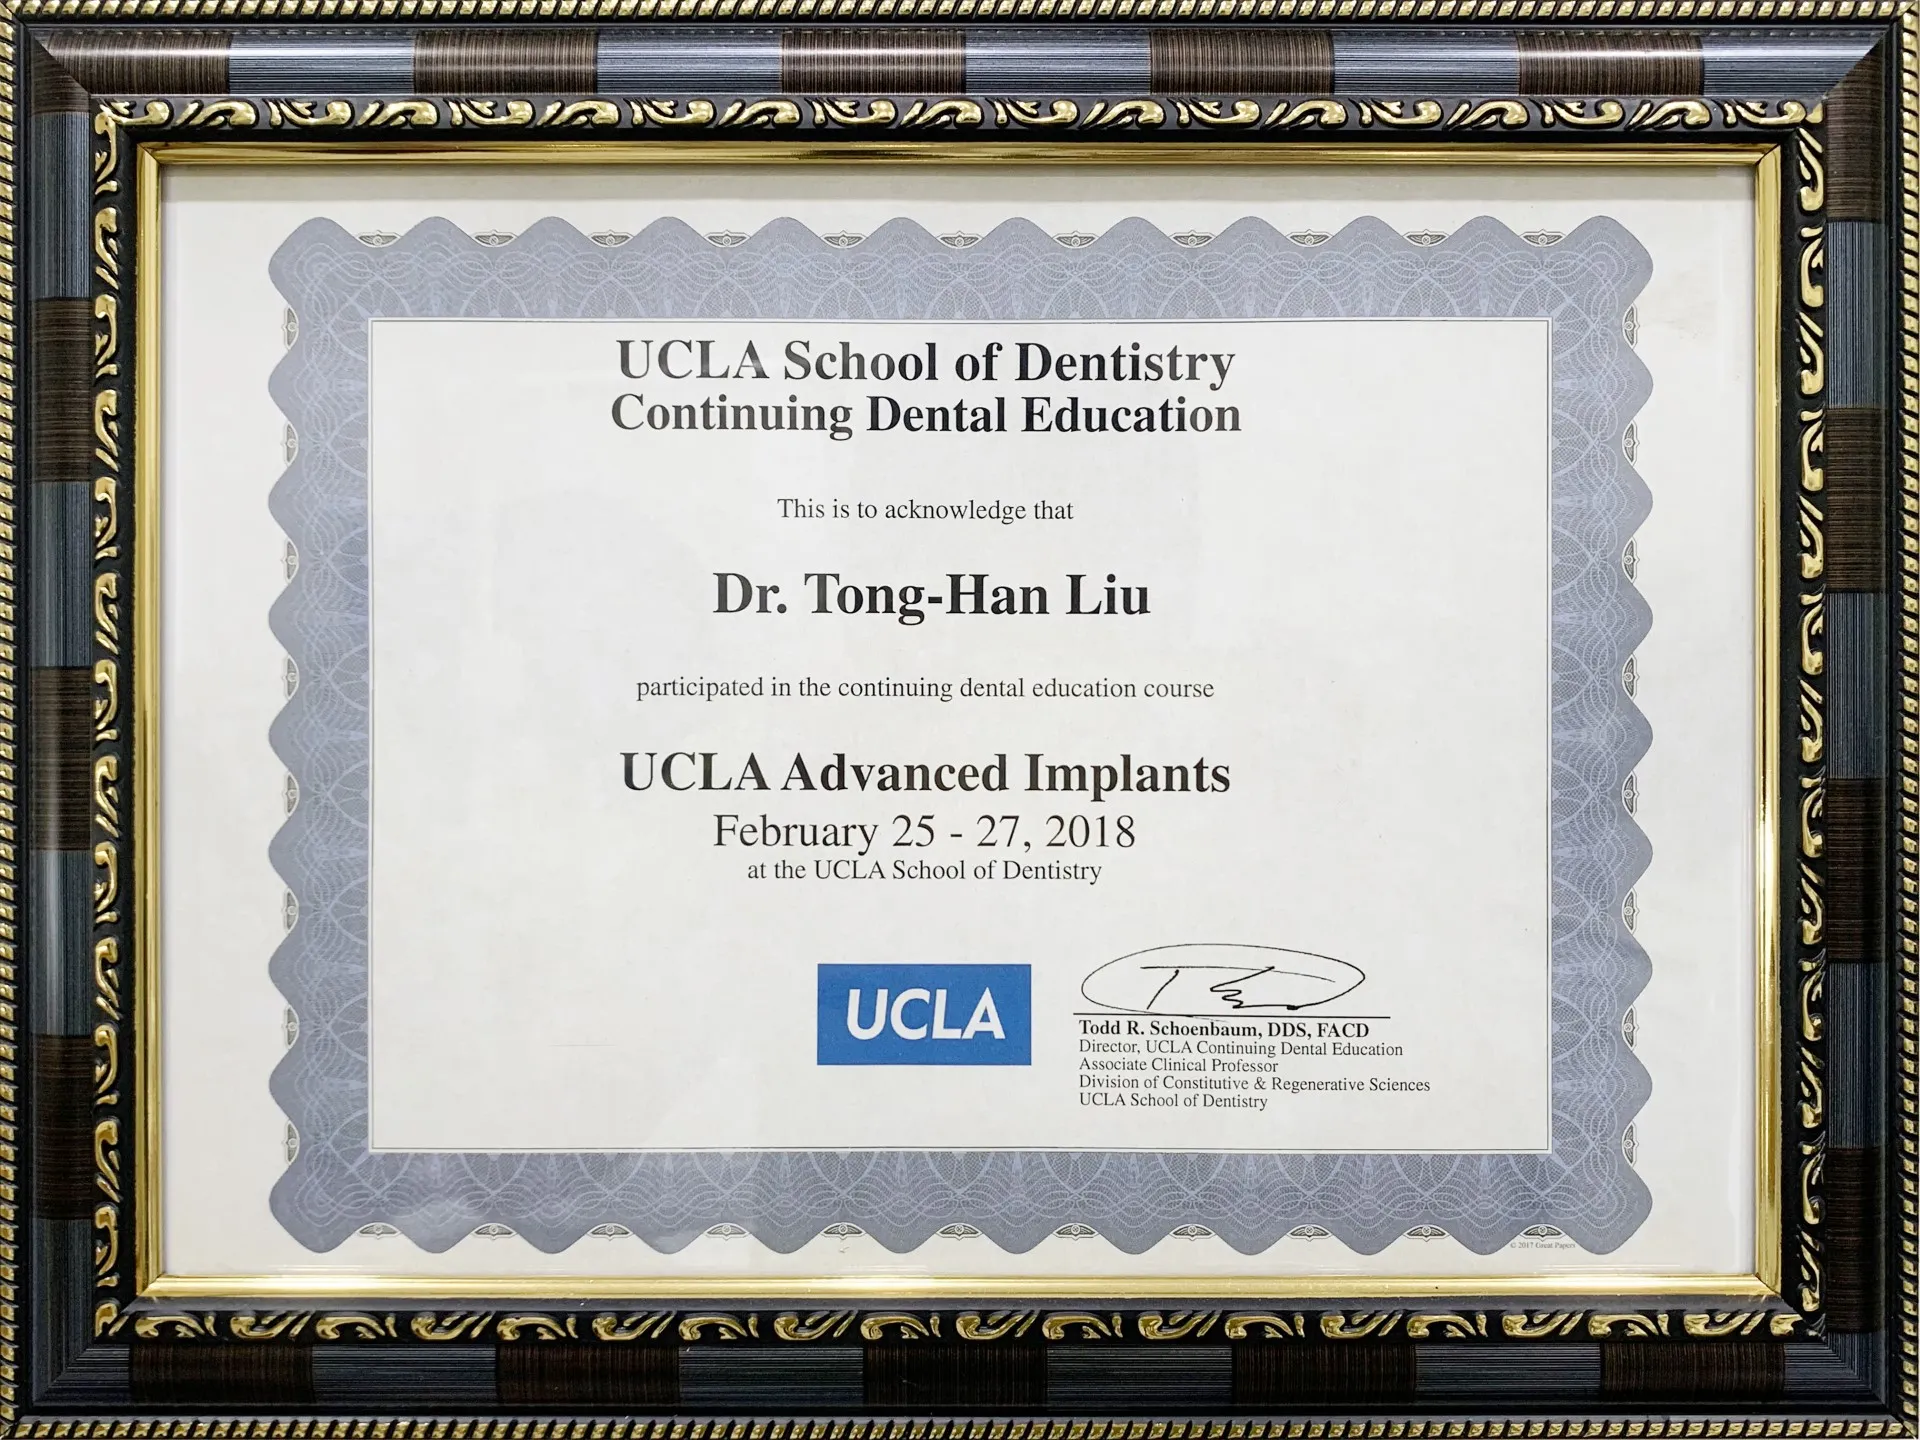 UCLA Advanced Implants